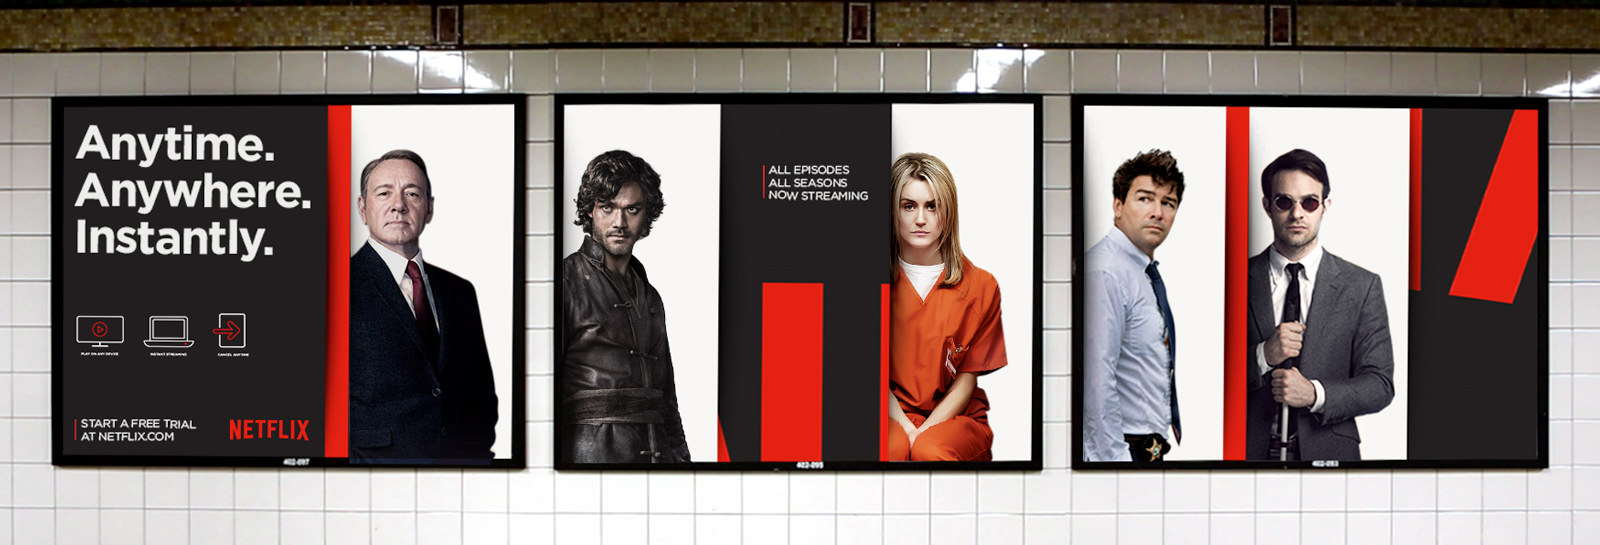 Netflix band billboard